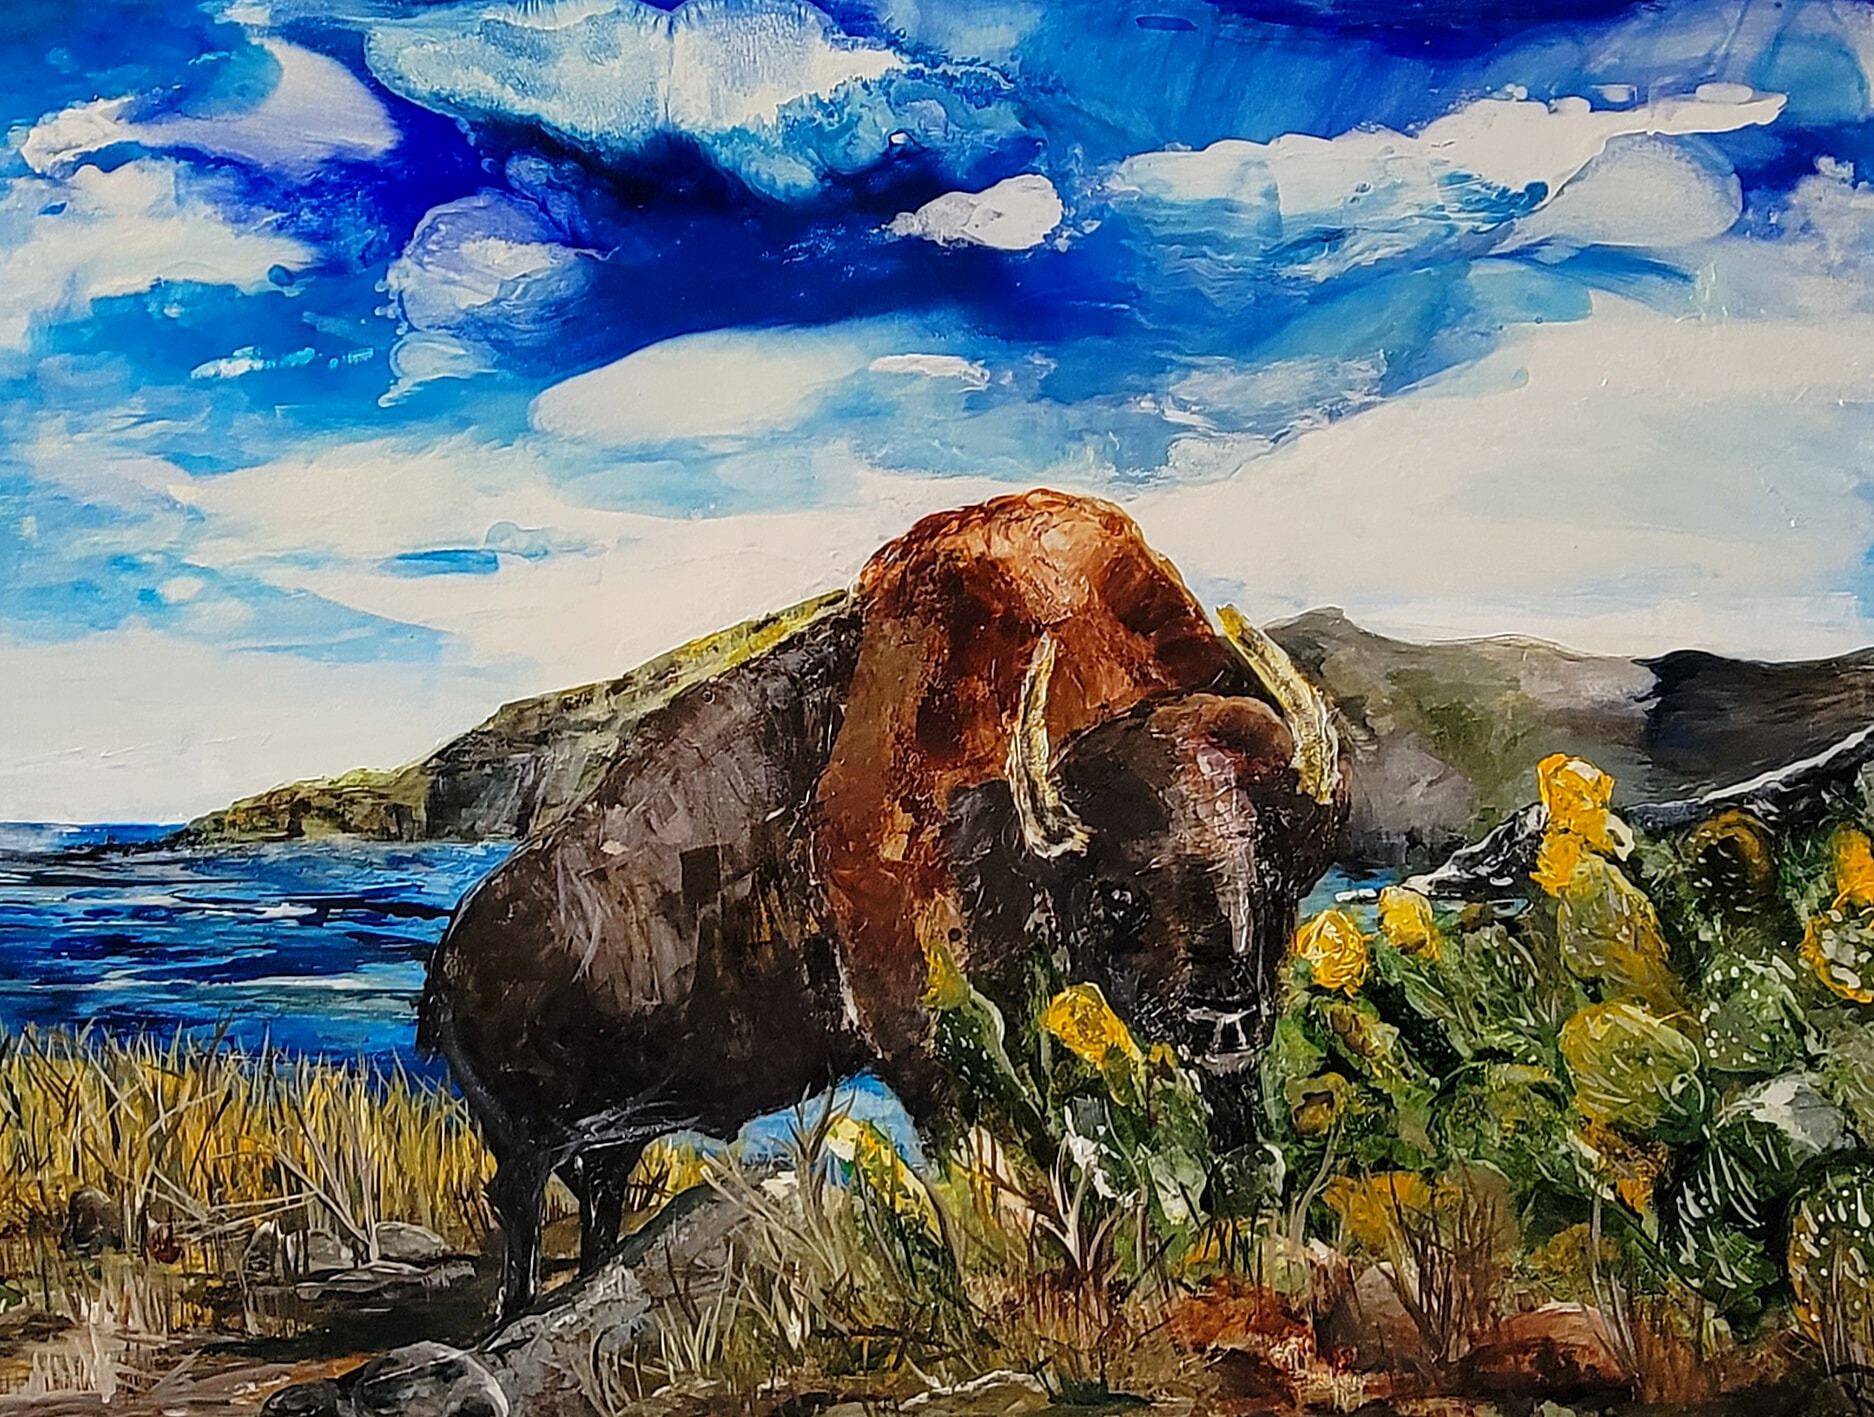 Catalina bison srilwm